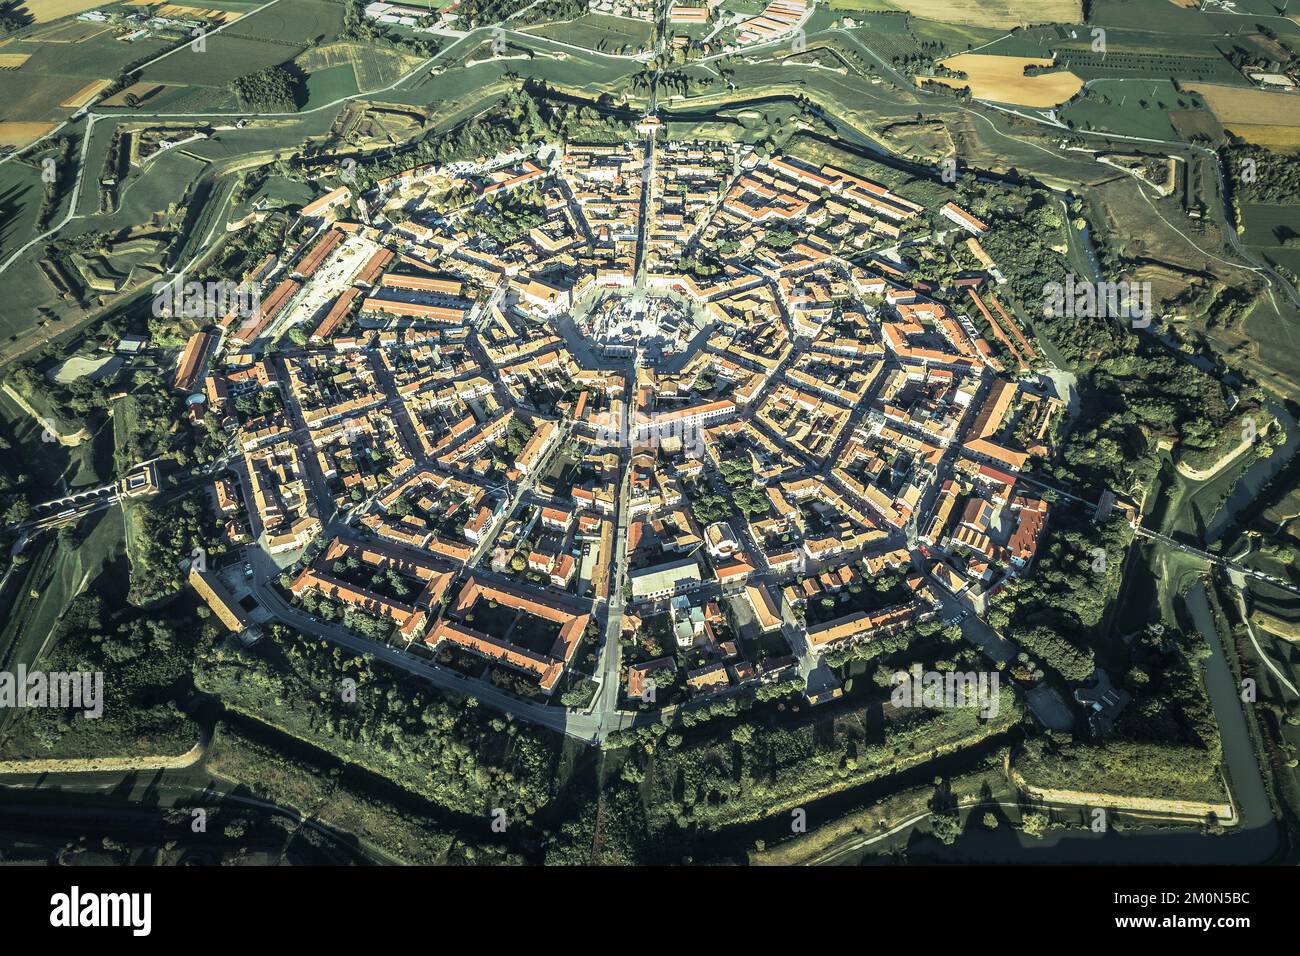 Star fort town of Palmanova aerial view, UNESCO world heritage site in Friuli Venezia Giulia region of Italy Stock Photo